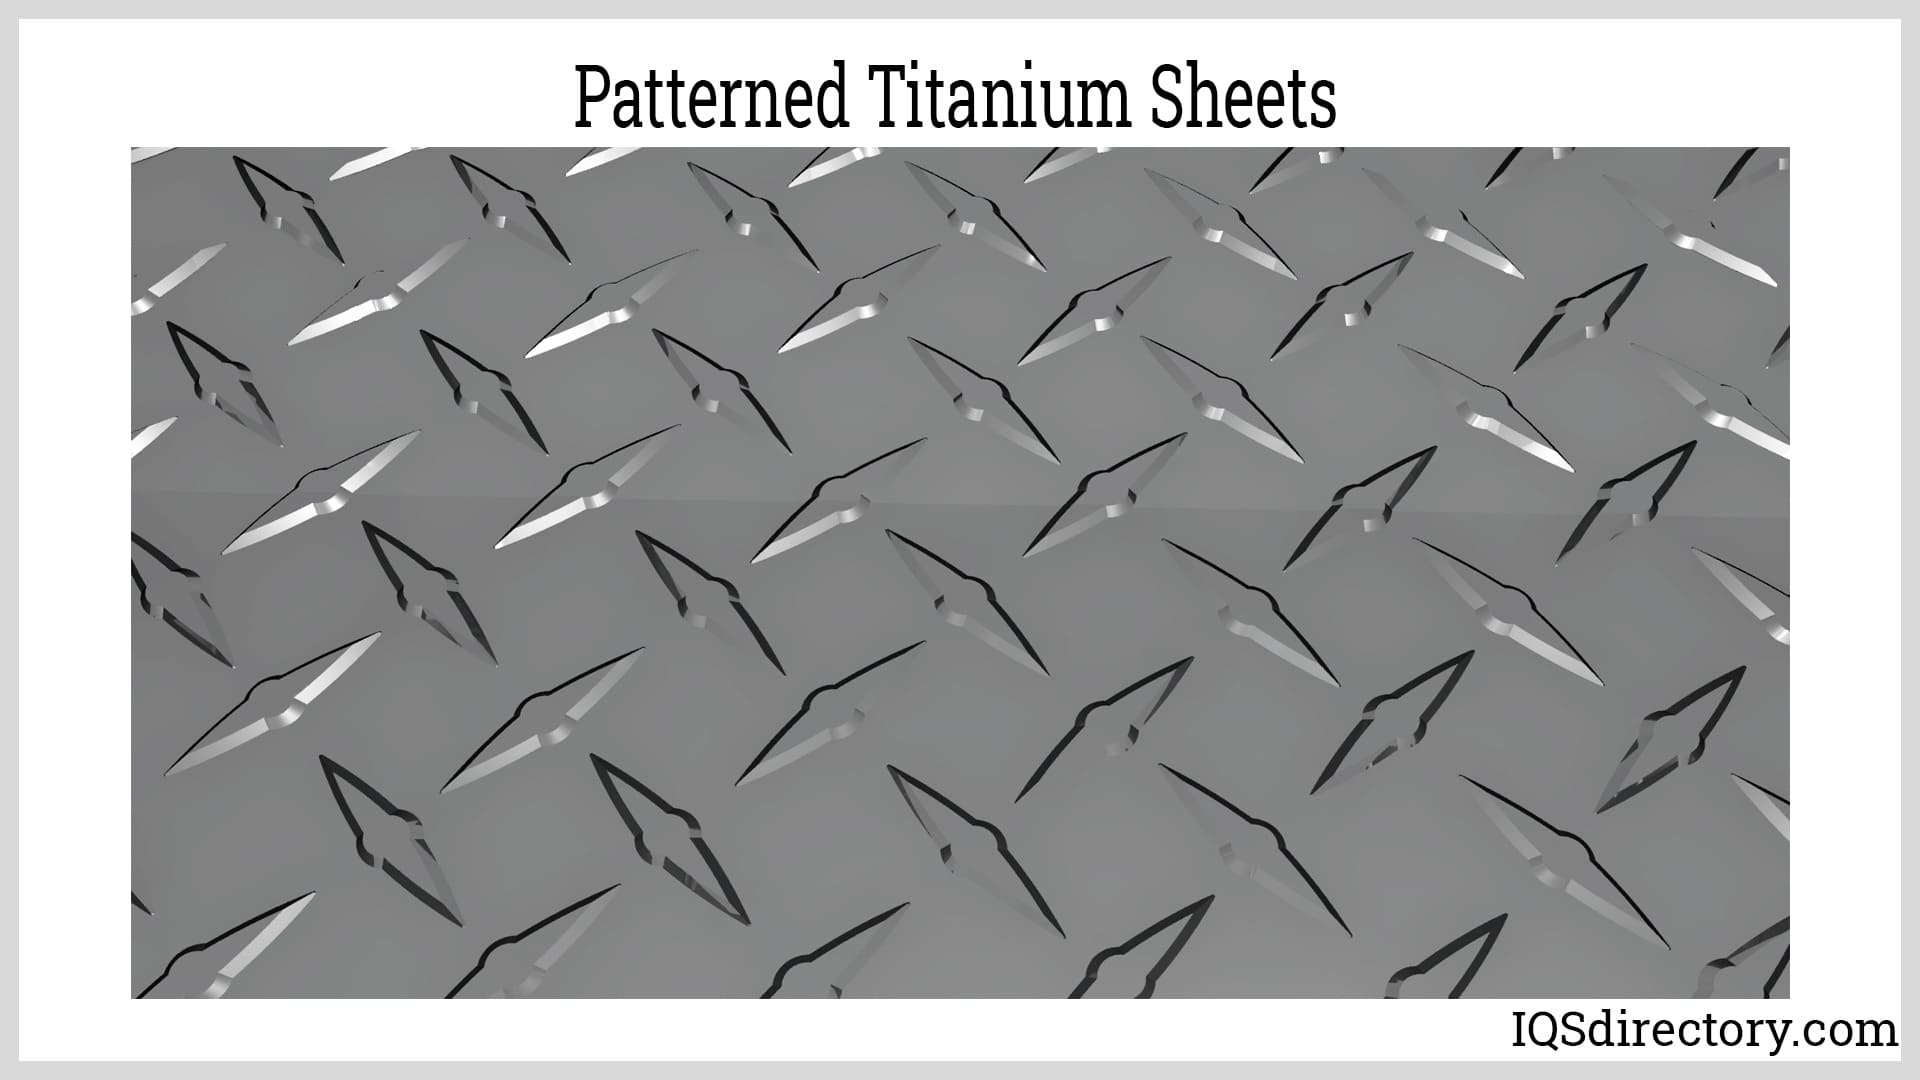 Titanium Metal: What Is It? How Is It Used? Properties